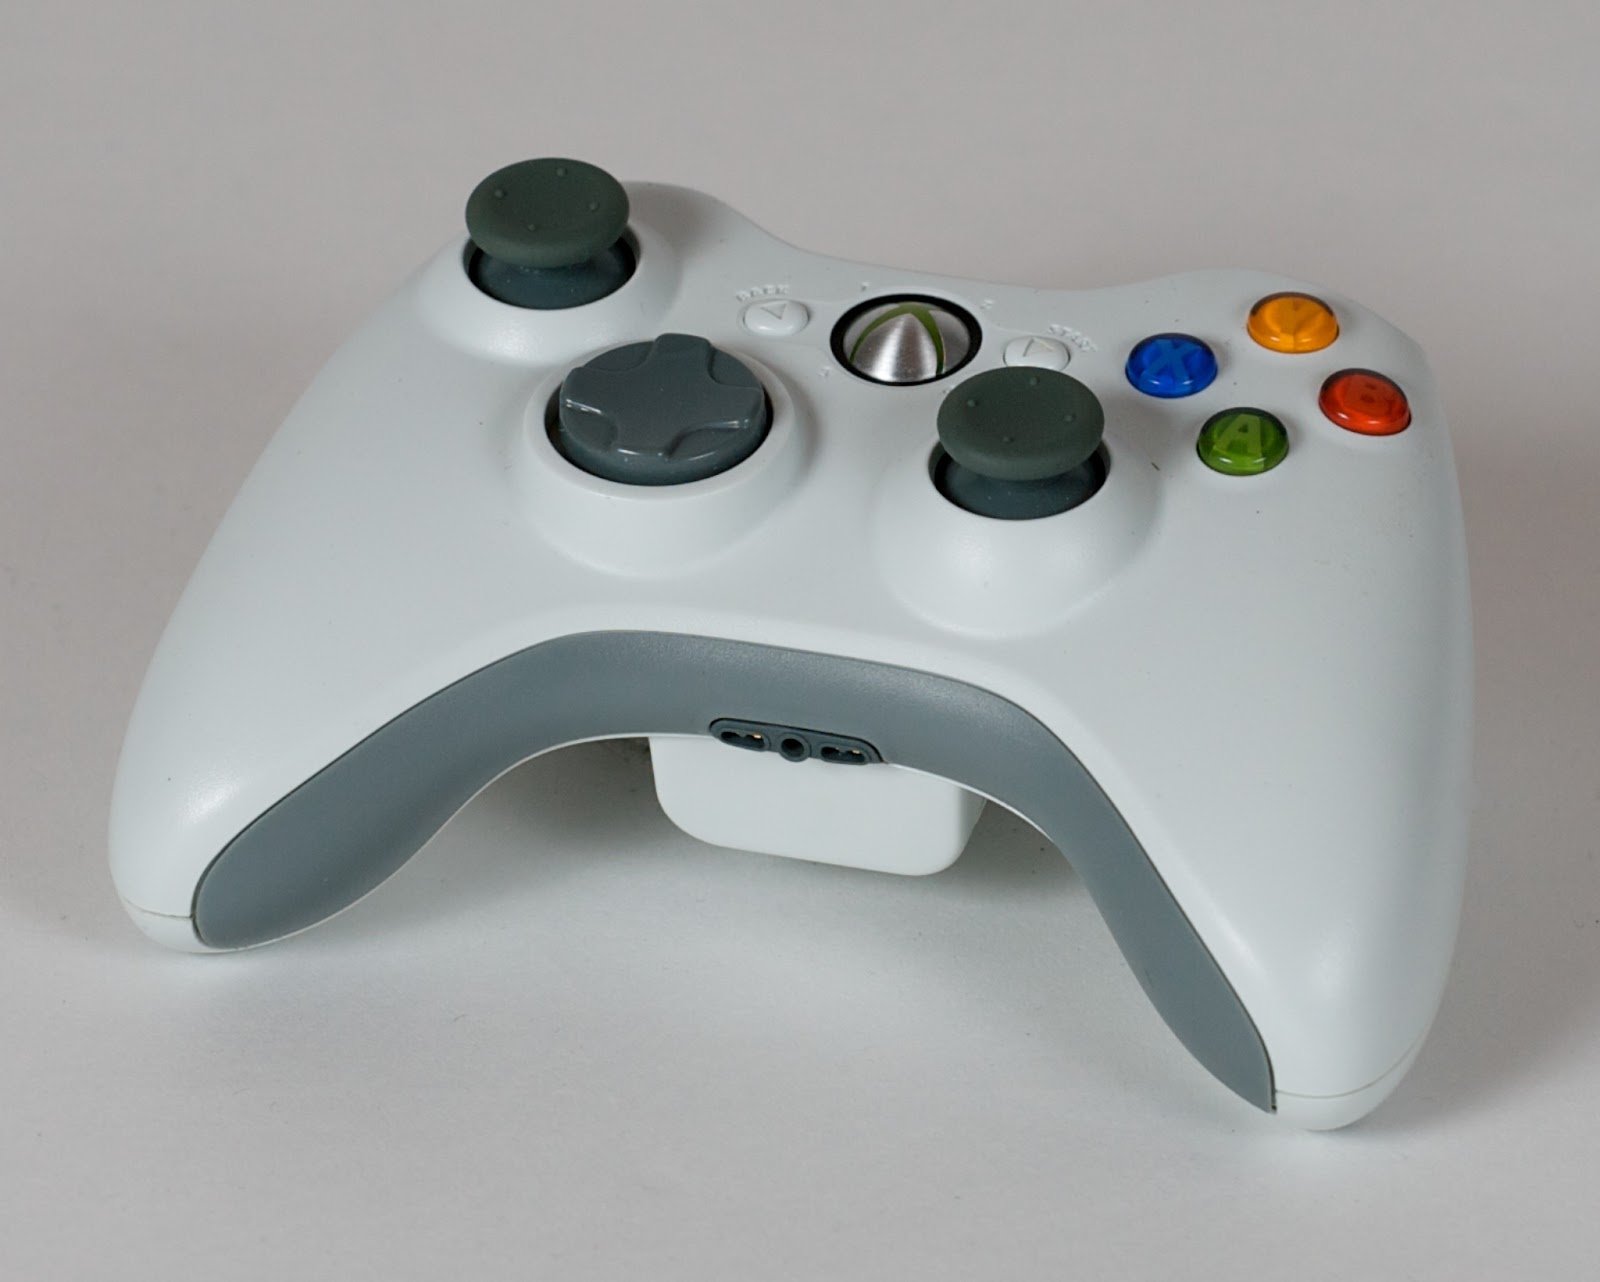 Xbox 360 Wireless Controller Wikipedia